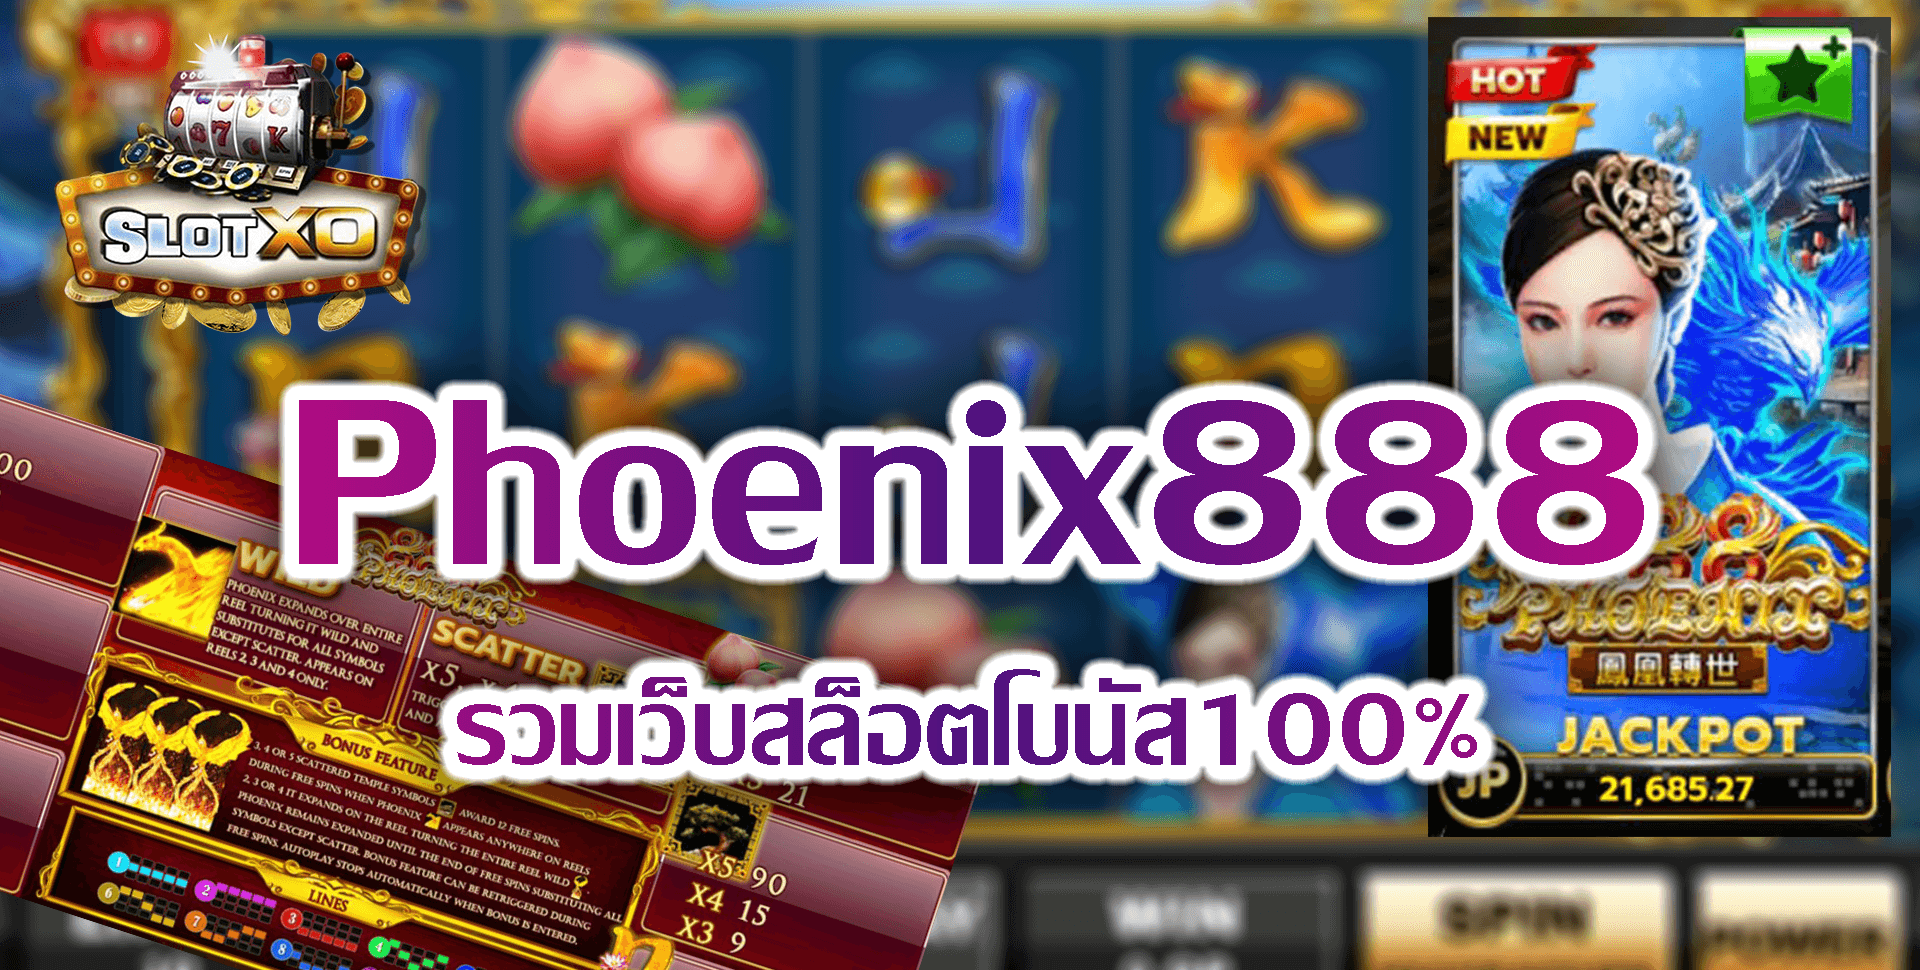 Slotxo-Slot xo-Phoenix-888-5